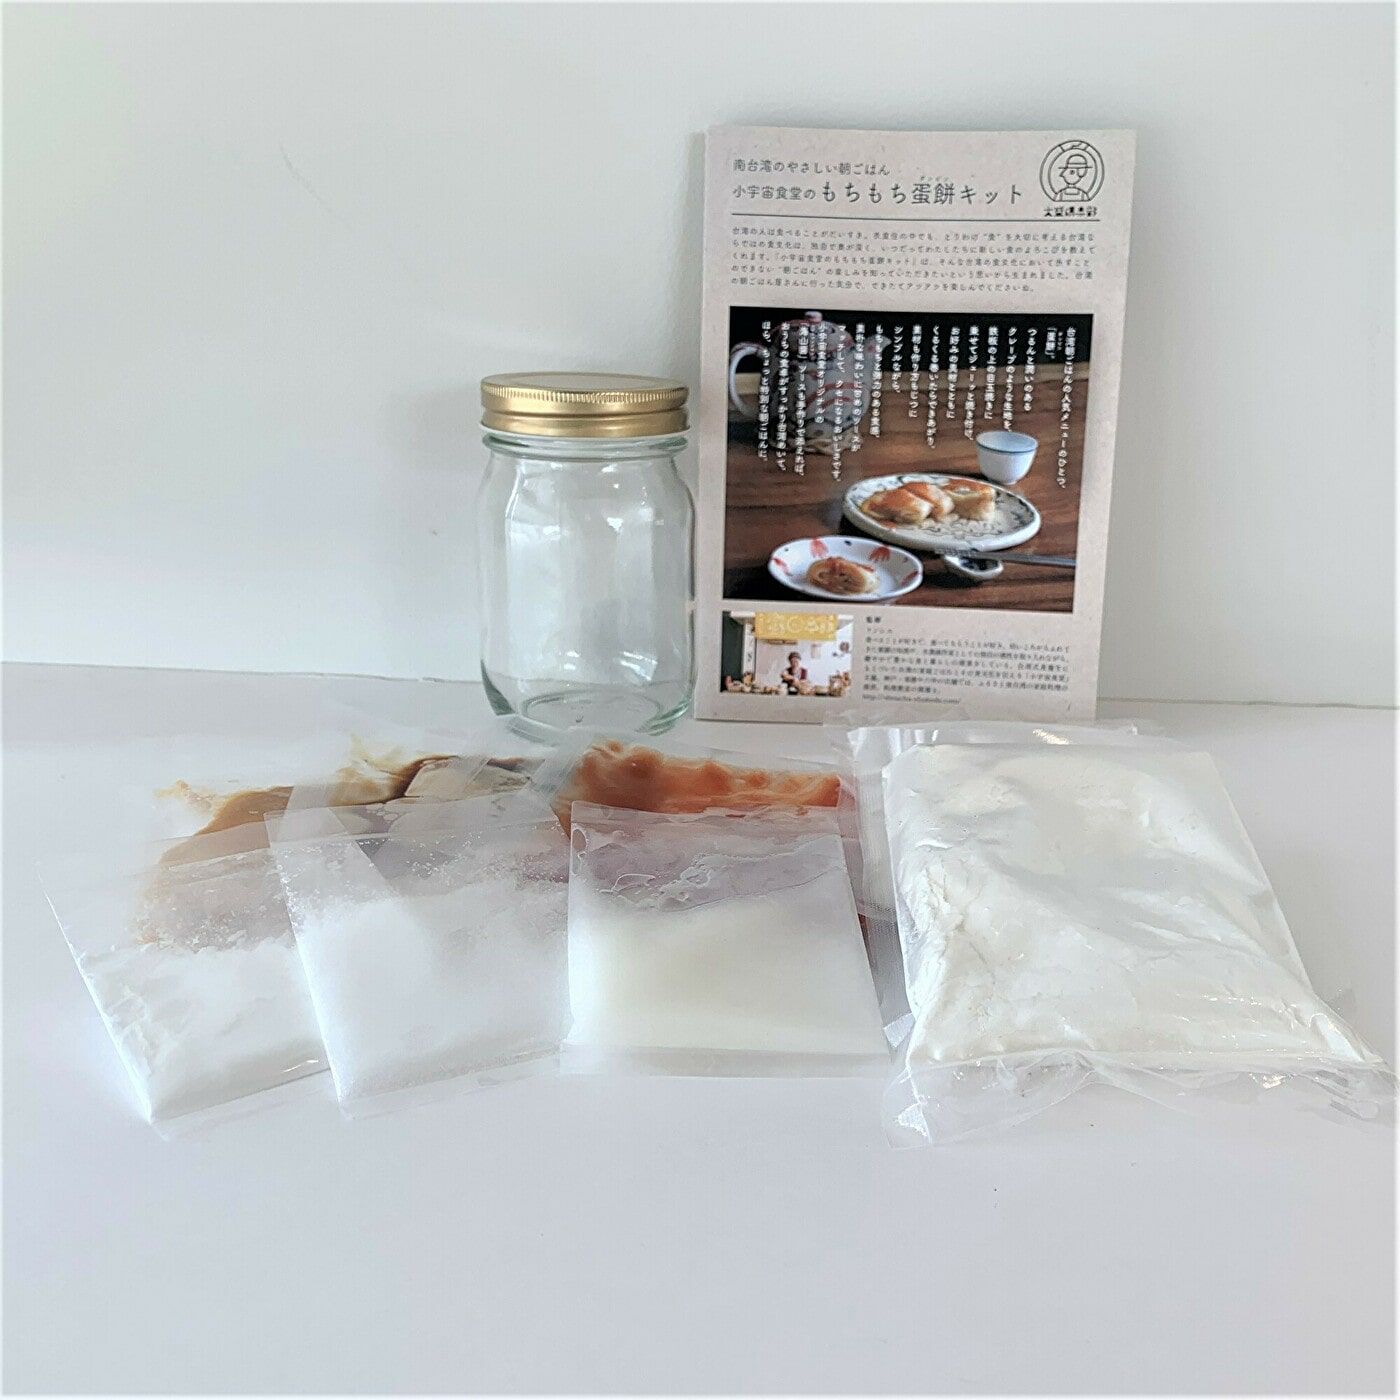 Natucul Chou Club(ナチュカル・シュークラブ)|小宇宙食堂リンシエさんの台湾の朝ごはん 蛋餅と海山醤ソース手づくりキット（2袋）|お届けセット